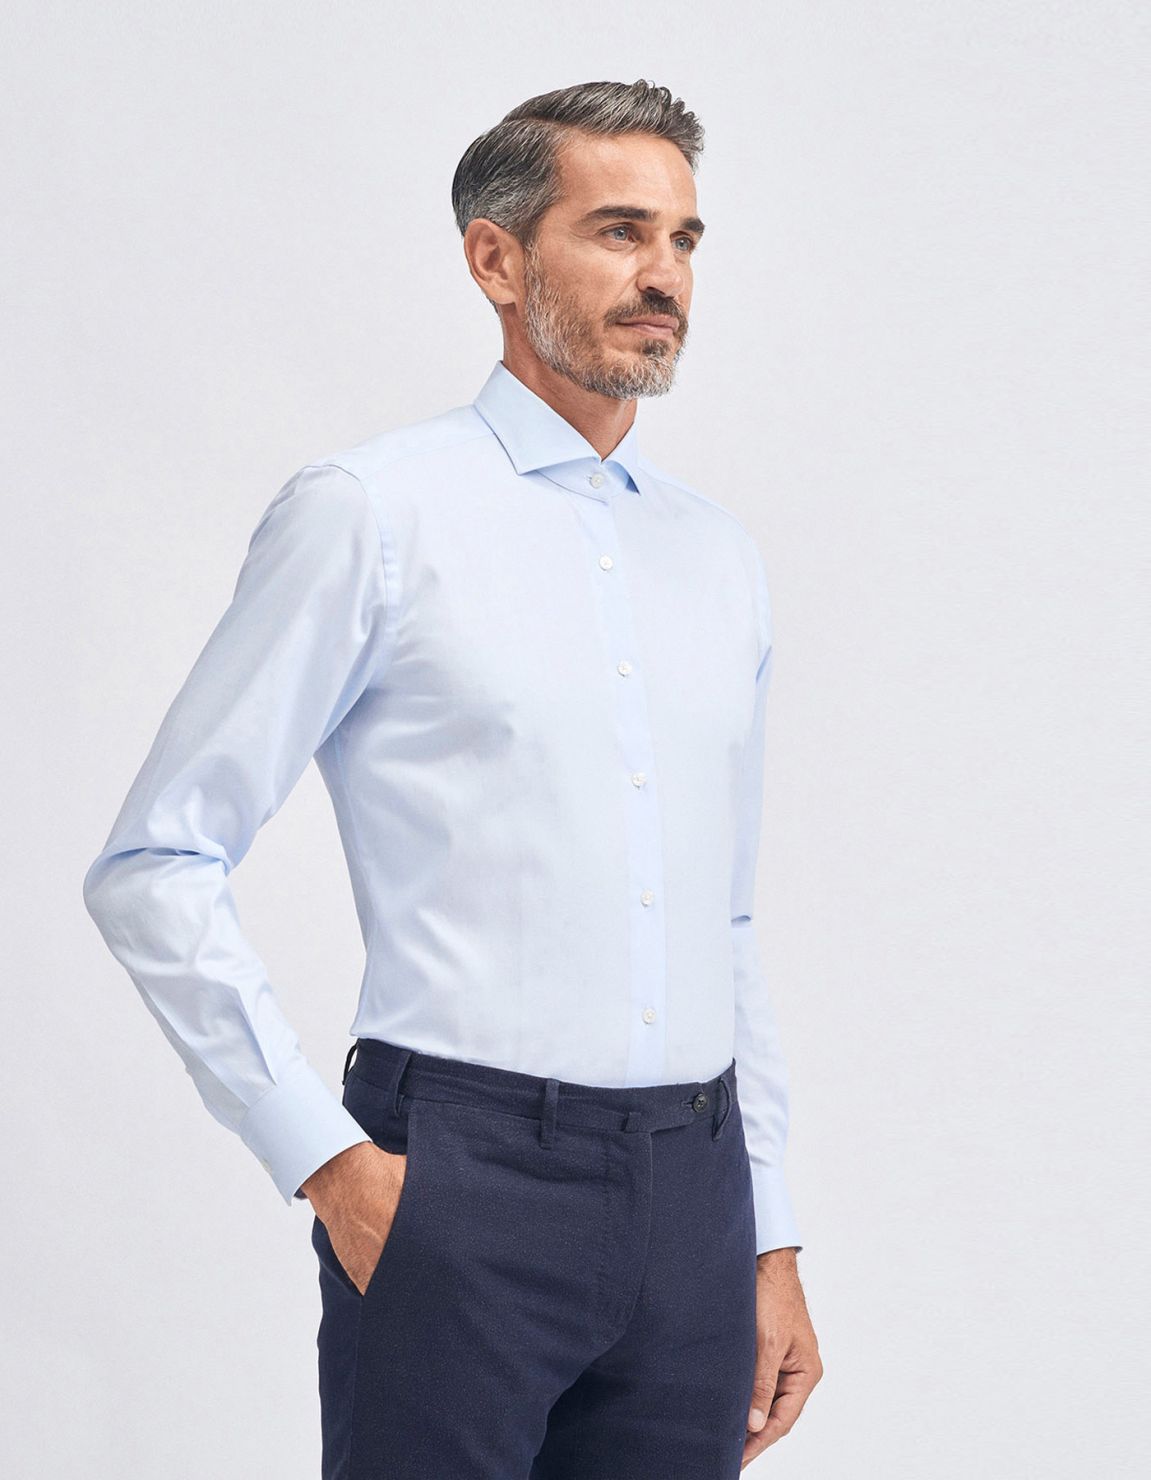 Shirt Collar cutaway Light Blue Oxford Slim Fit 1